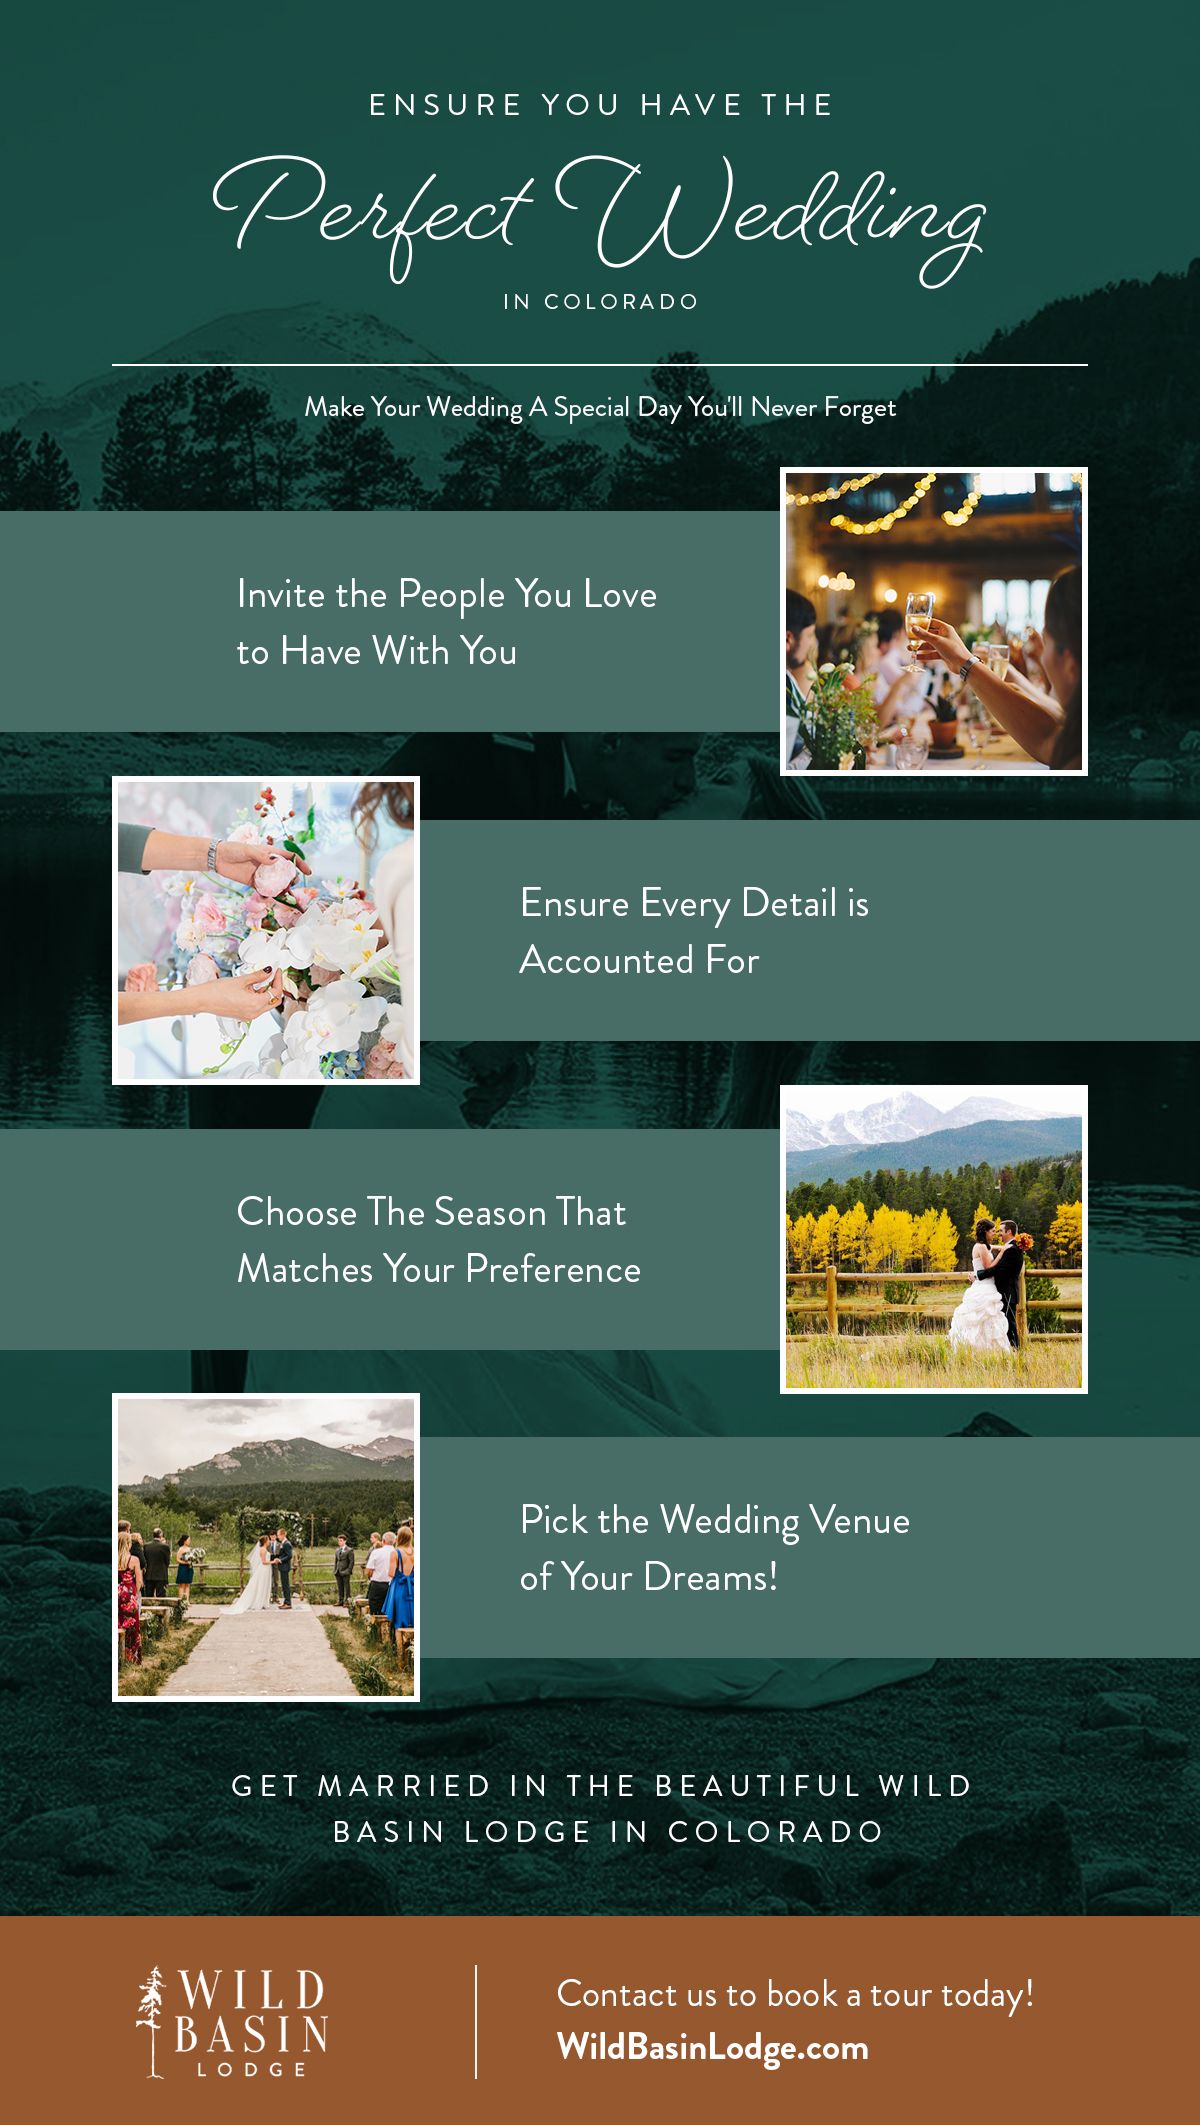 Ensure You Have the Perfect Wedding in Colorado.jpg